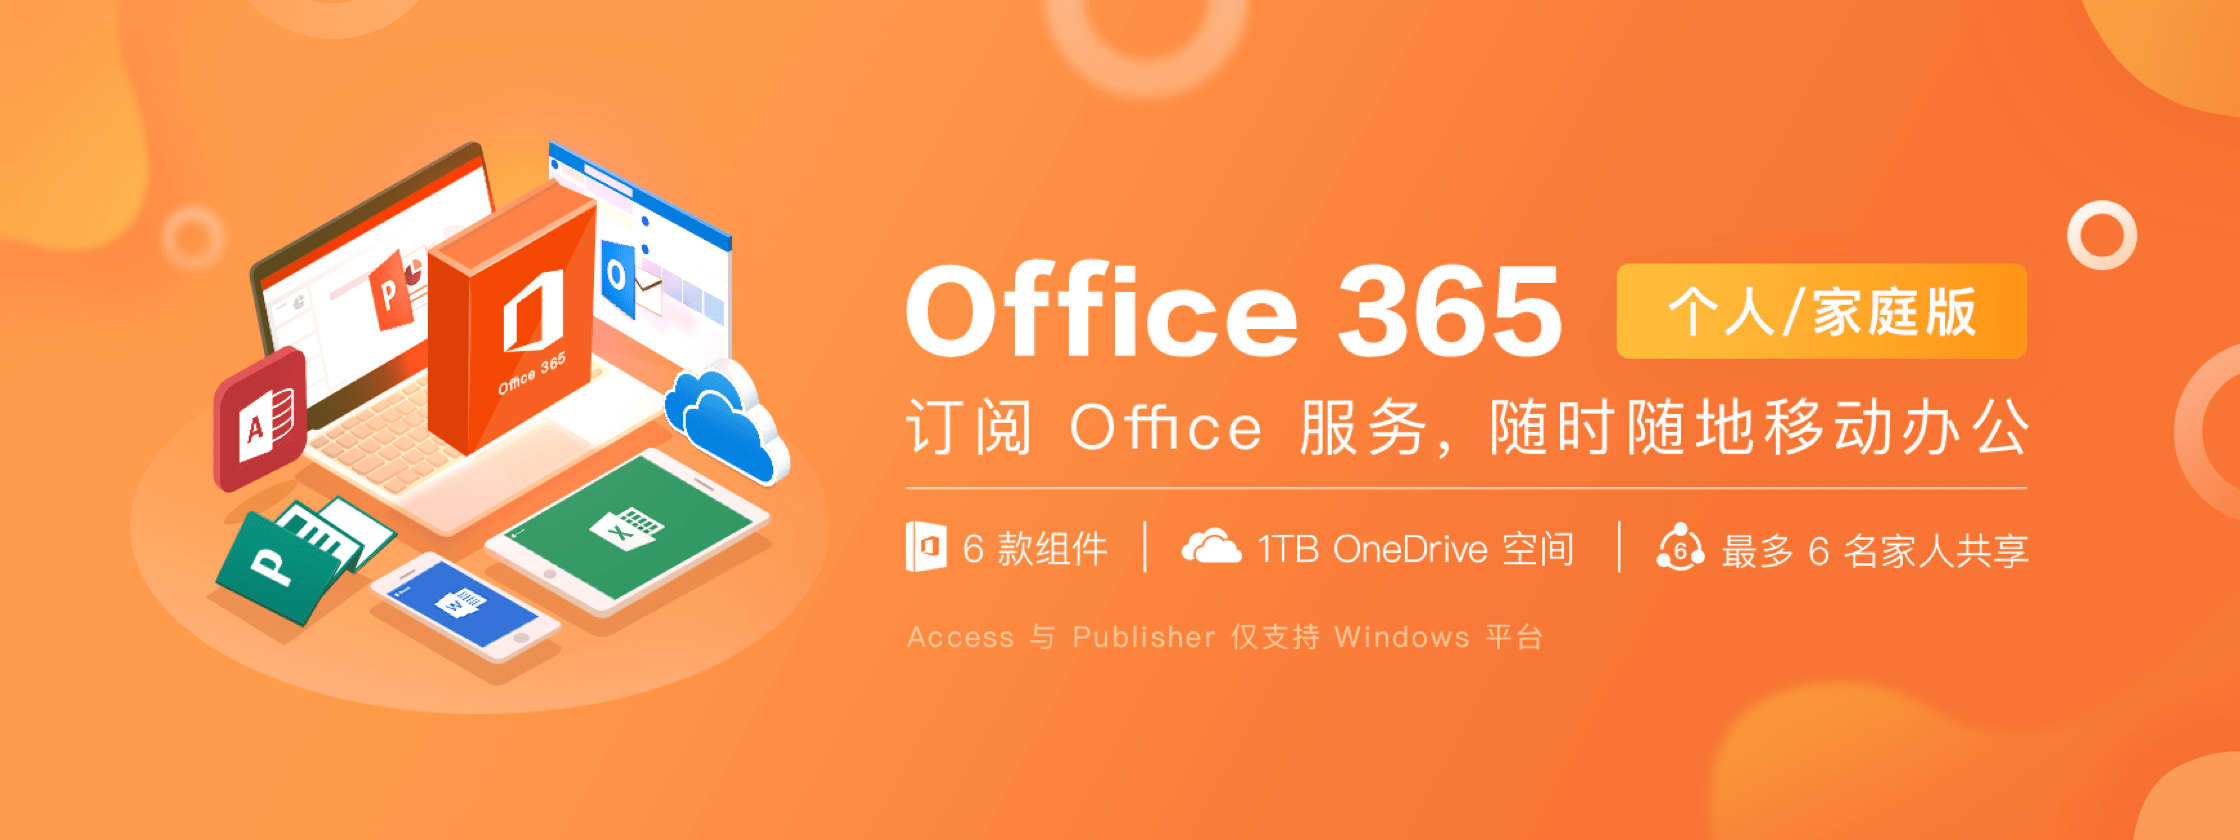 Office 365: 你的随身 Office 办公套件，含 Word、Excel、PowerPoint 和 Outlook